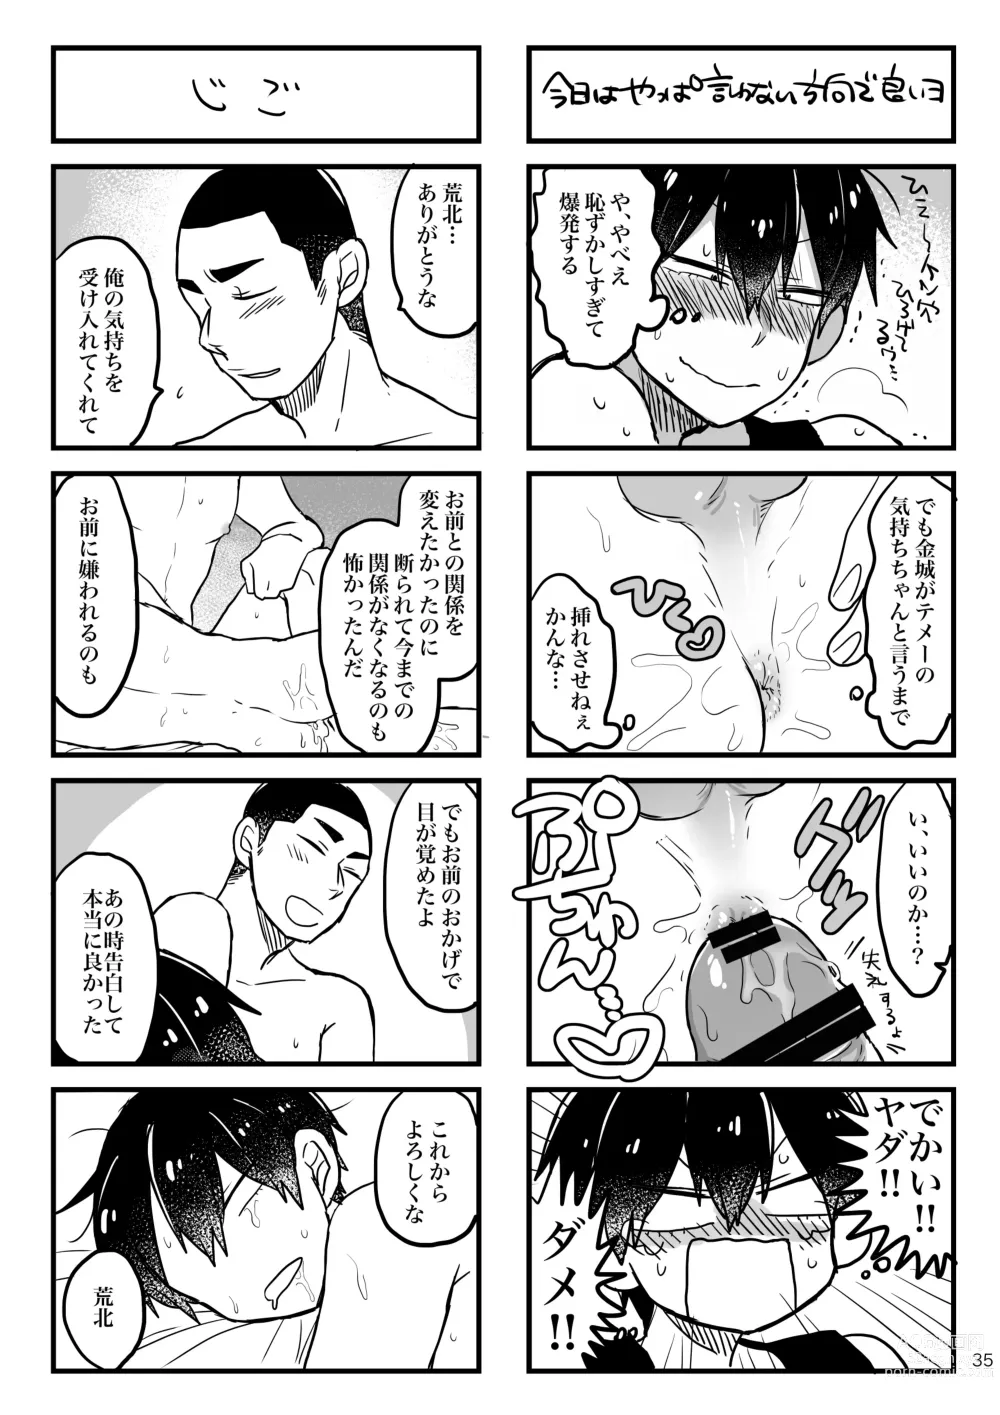 Page 33 of doujinshi Baby wo Namagoroshii!